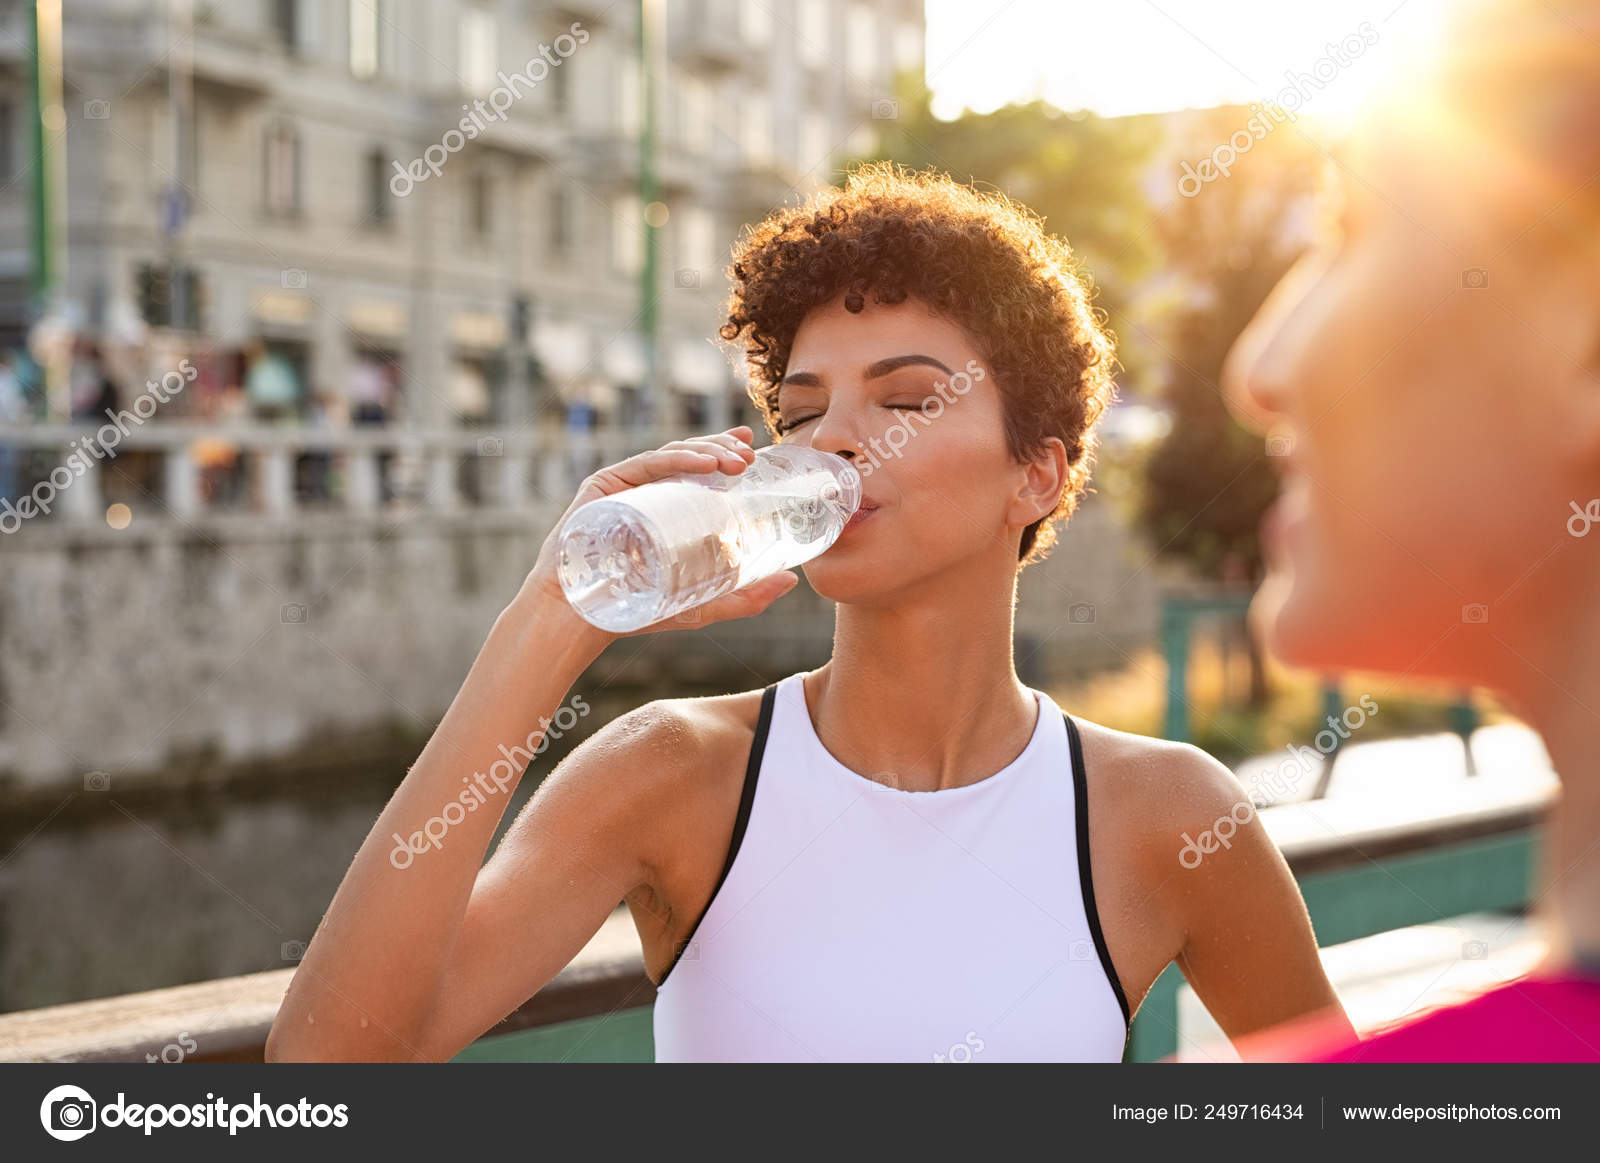 https://st4.depositphotos.com/1743476/24971/i/1600/depositphotos_249716434-stock-photo-athletic-woman-drinking-water-after.jpg